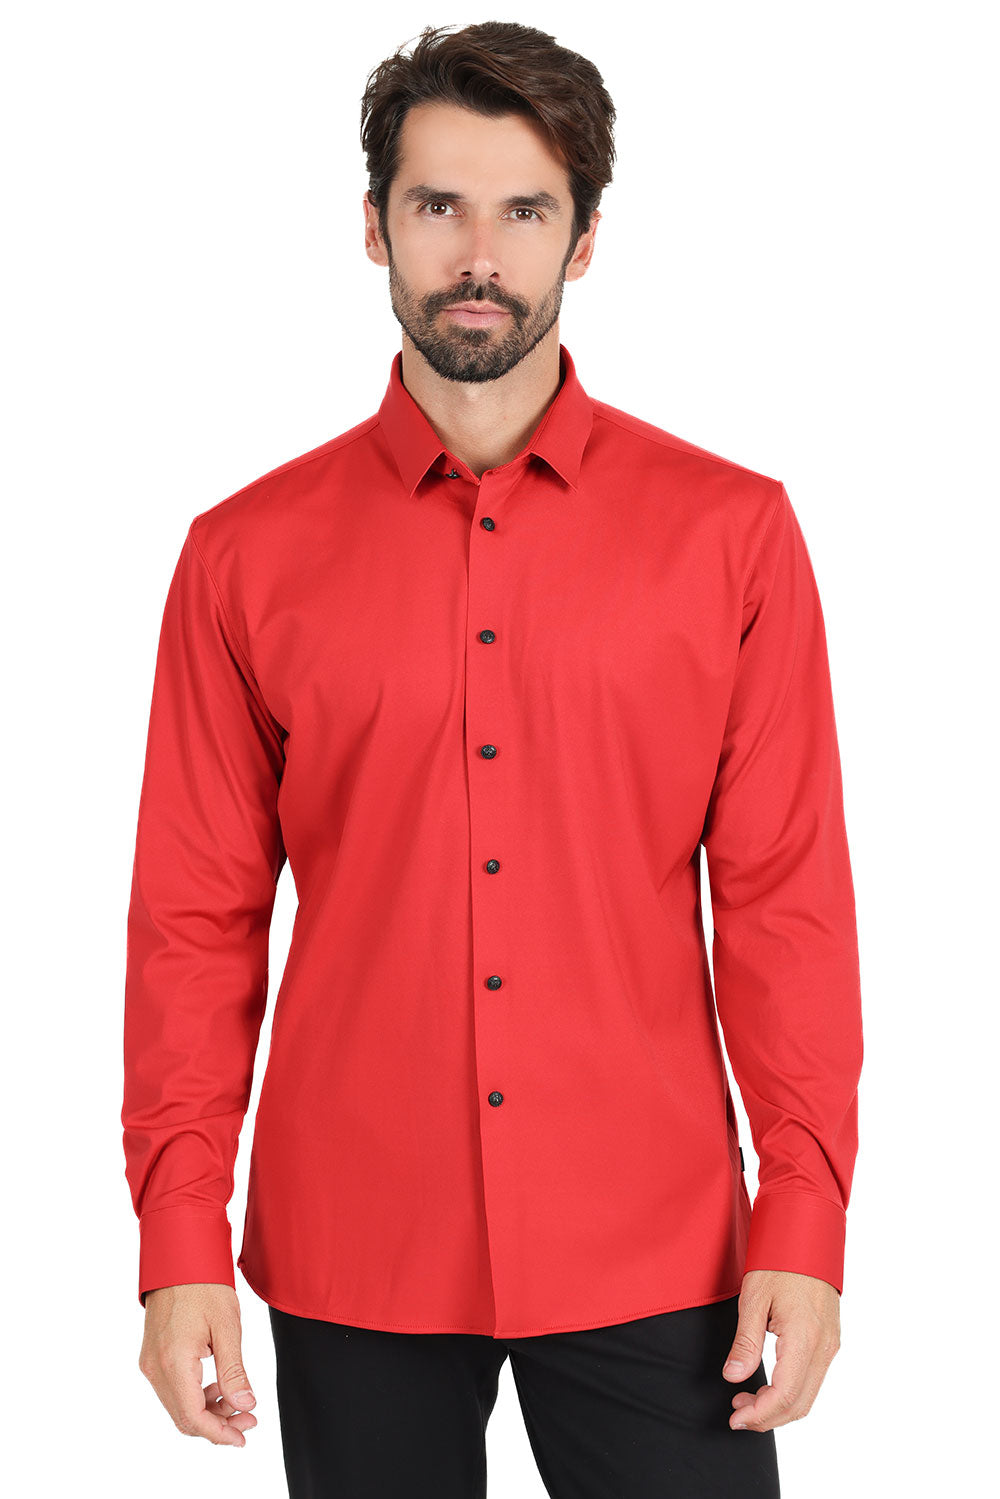 Barabas Men's Premium No Stitches Long Sleeves Shirts 2B400 Red